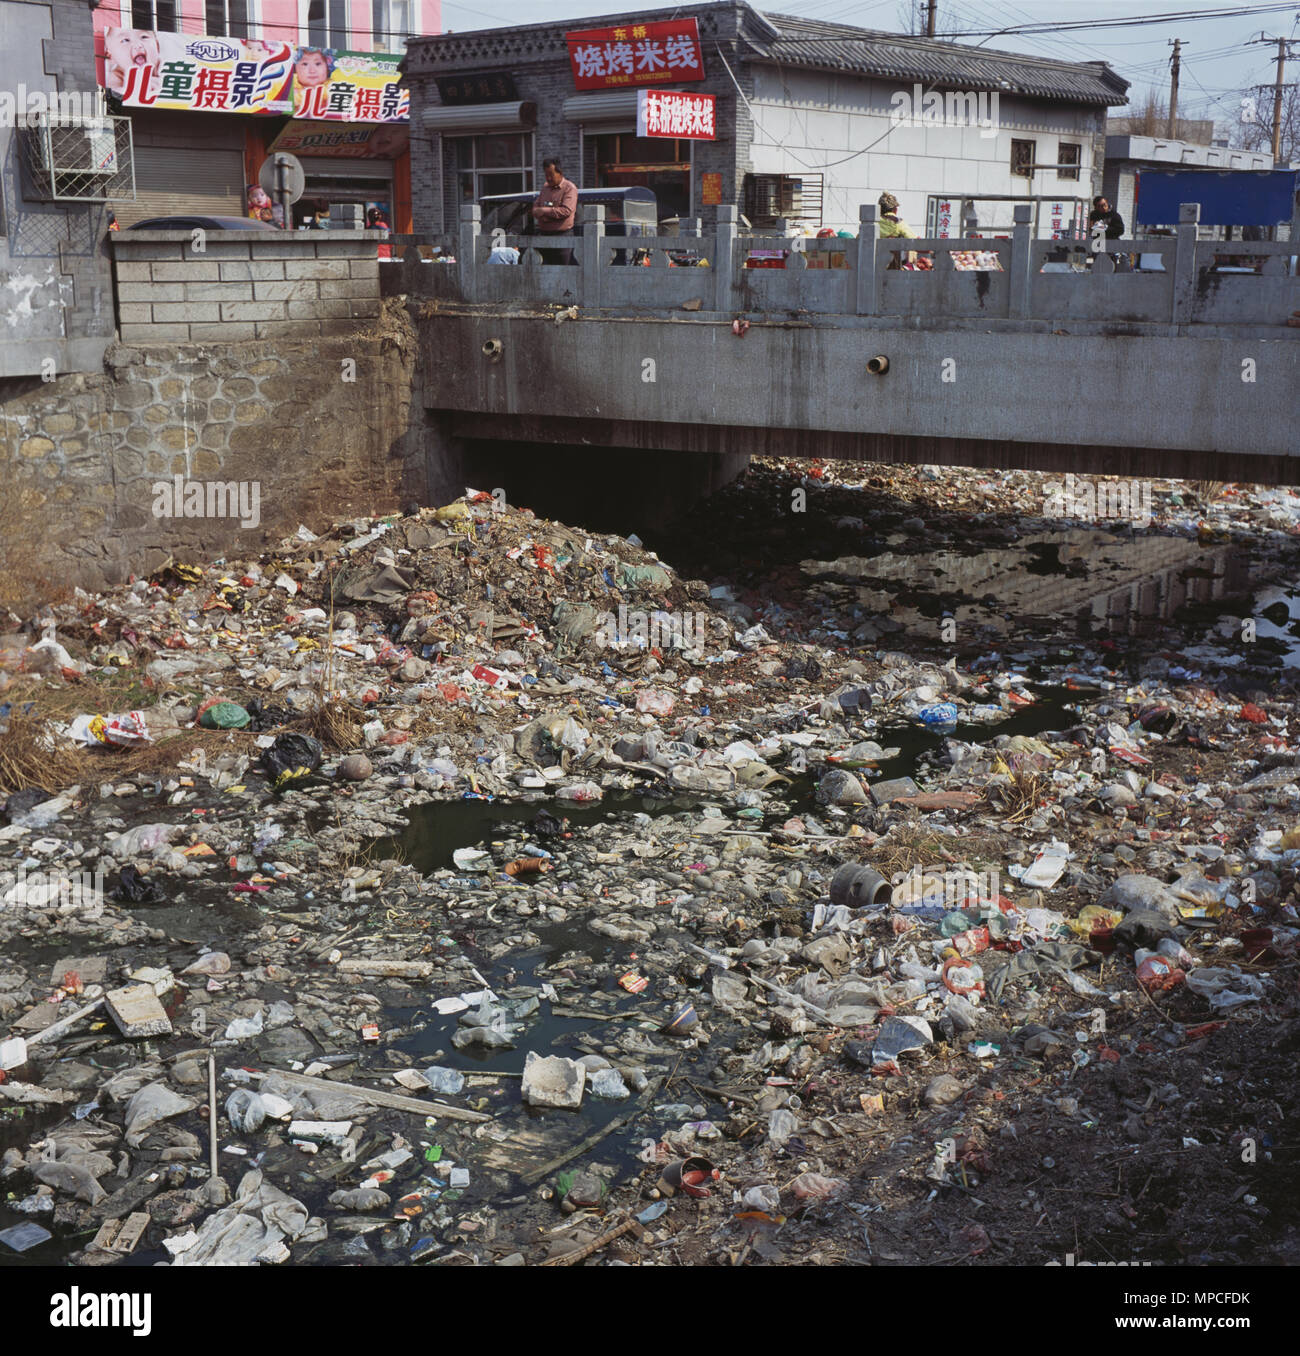 Eine Stadt River ist stark durch Müll in Shengfang, Langfang, Provinz Hebei, China belastet. 2013 Stockfoto